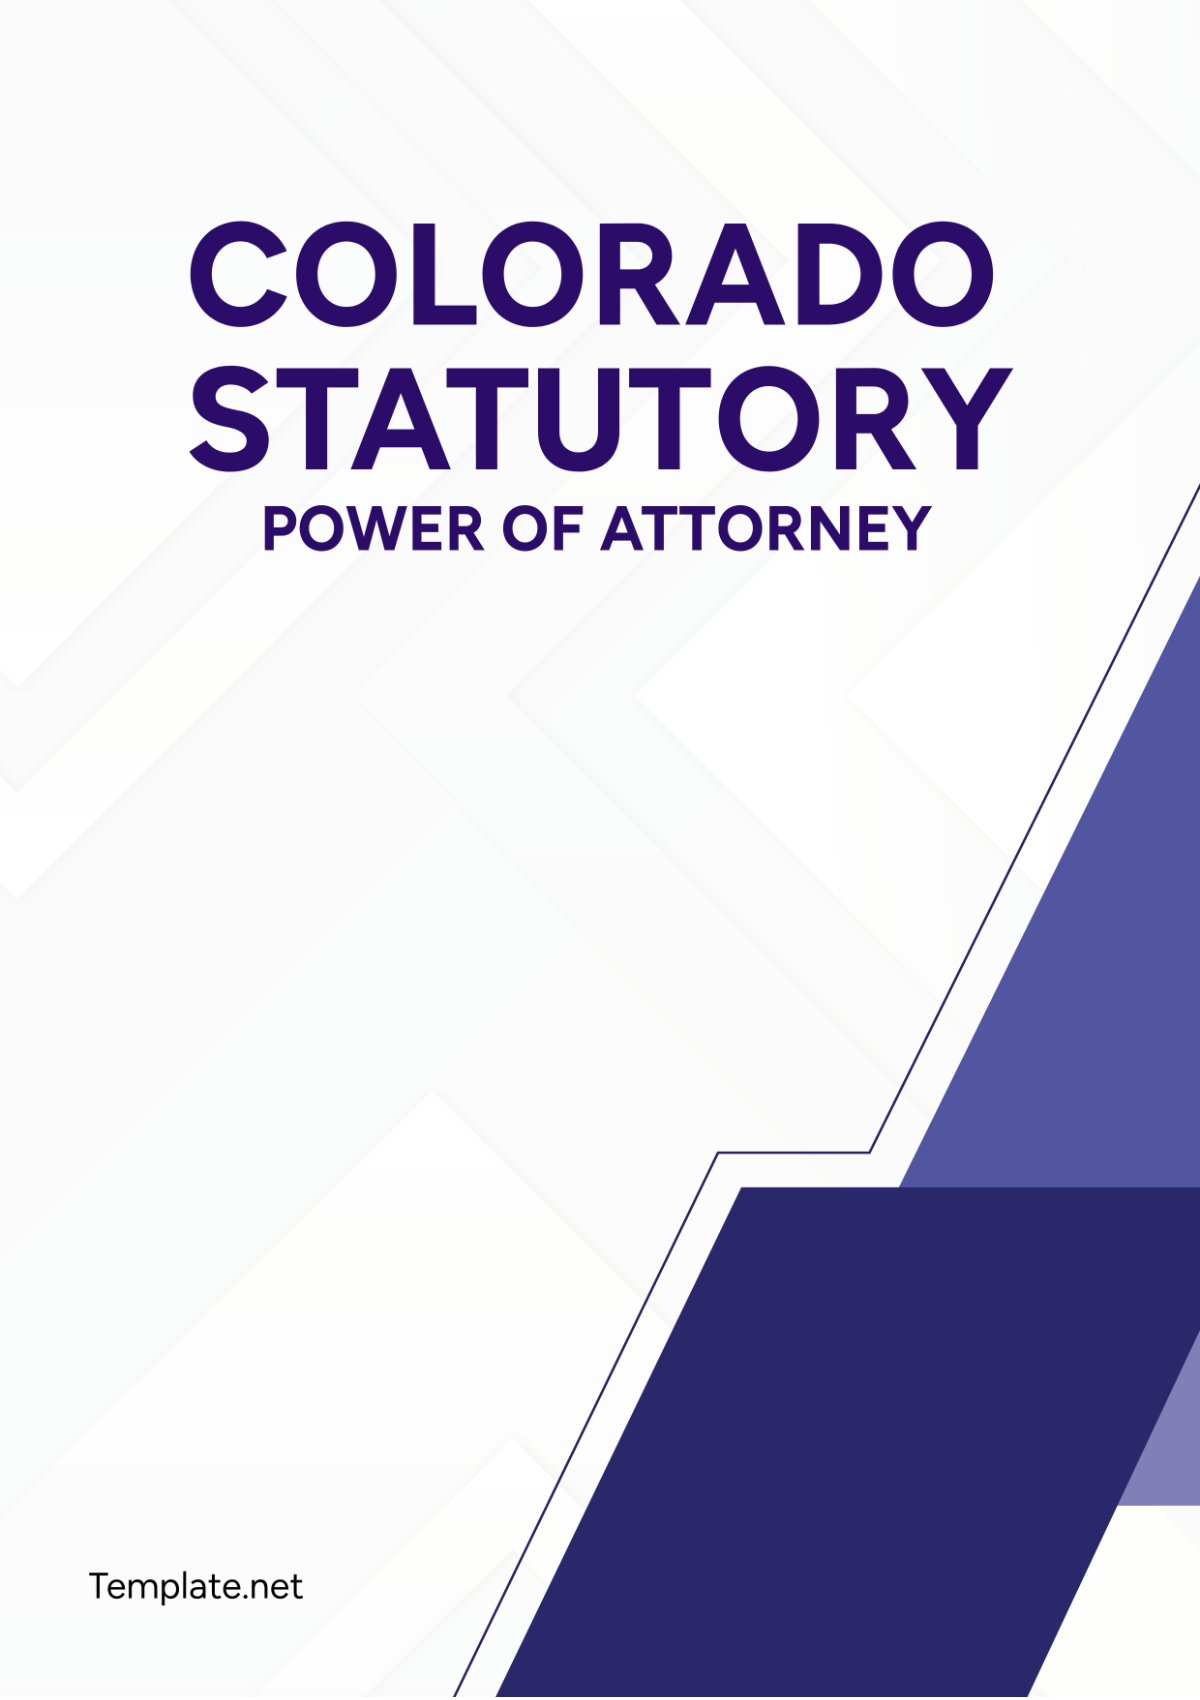 Colorado Statutory Power of Attorney Template